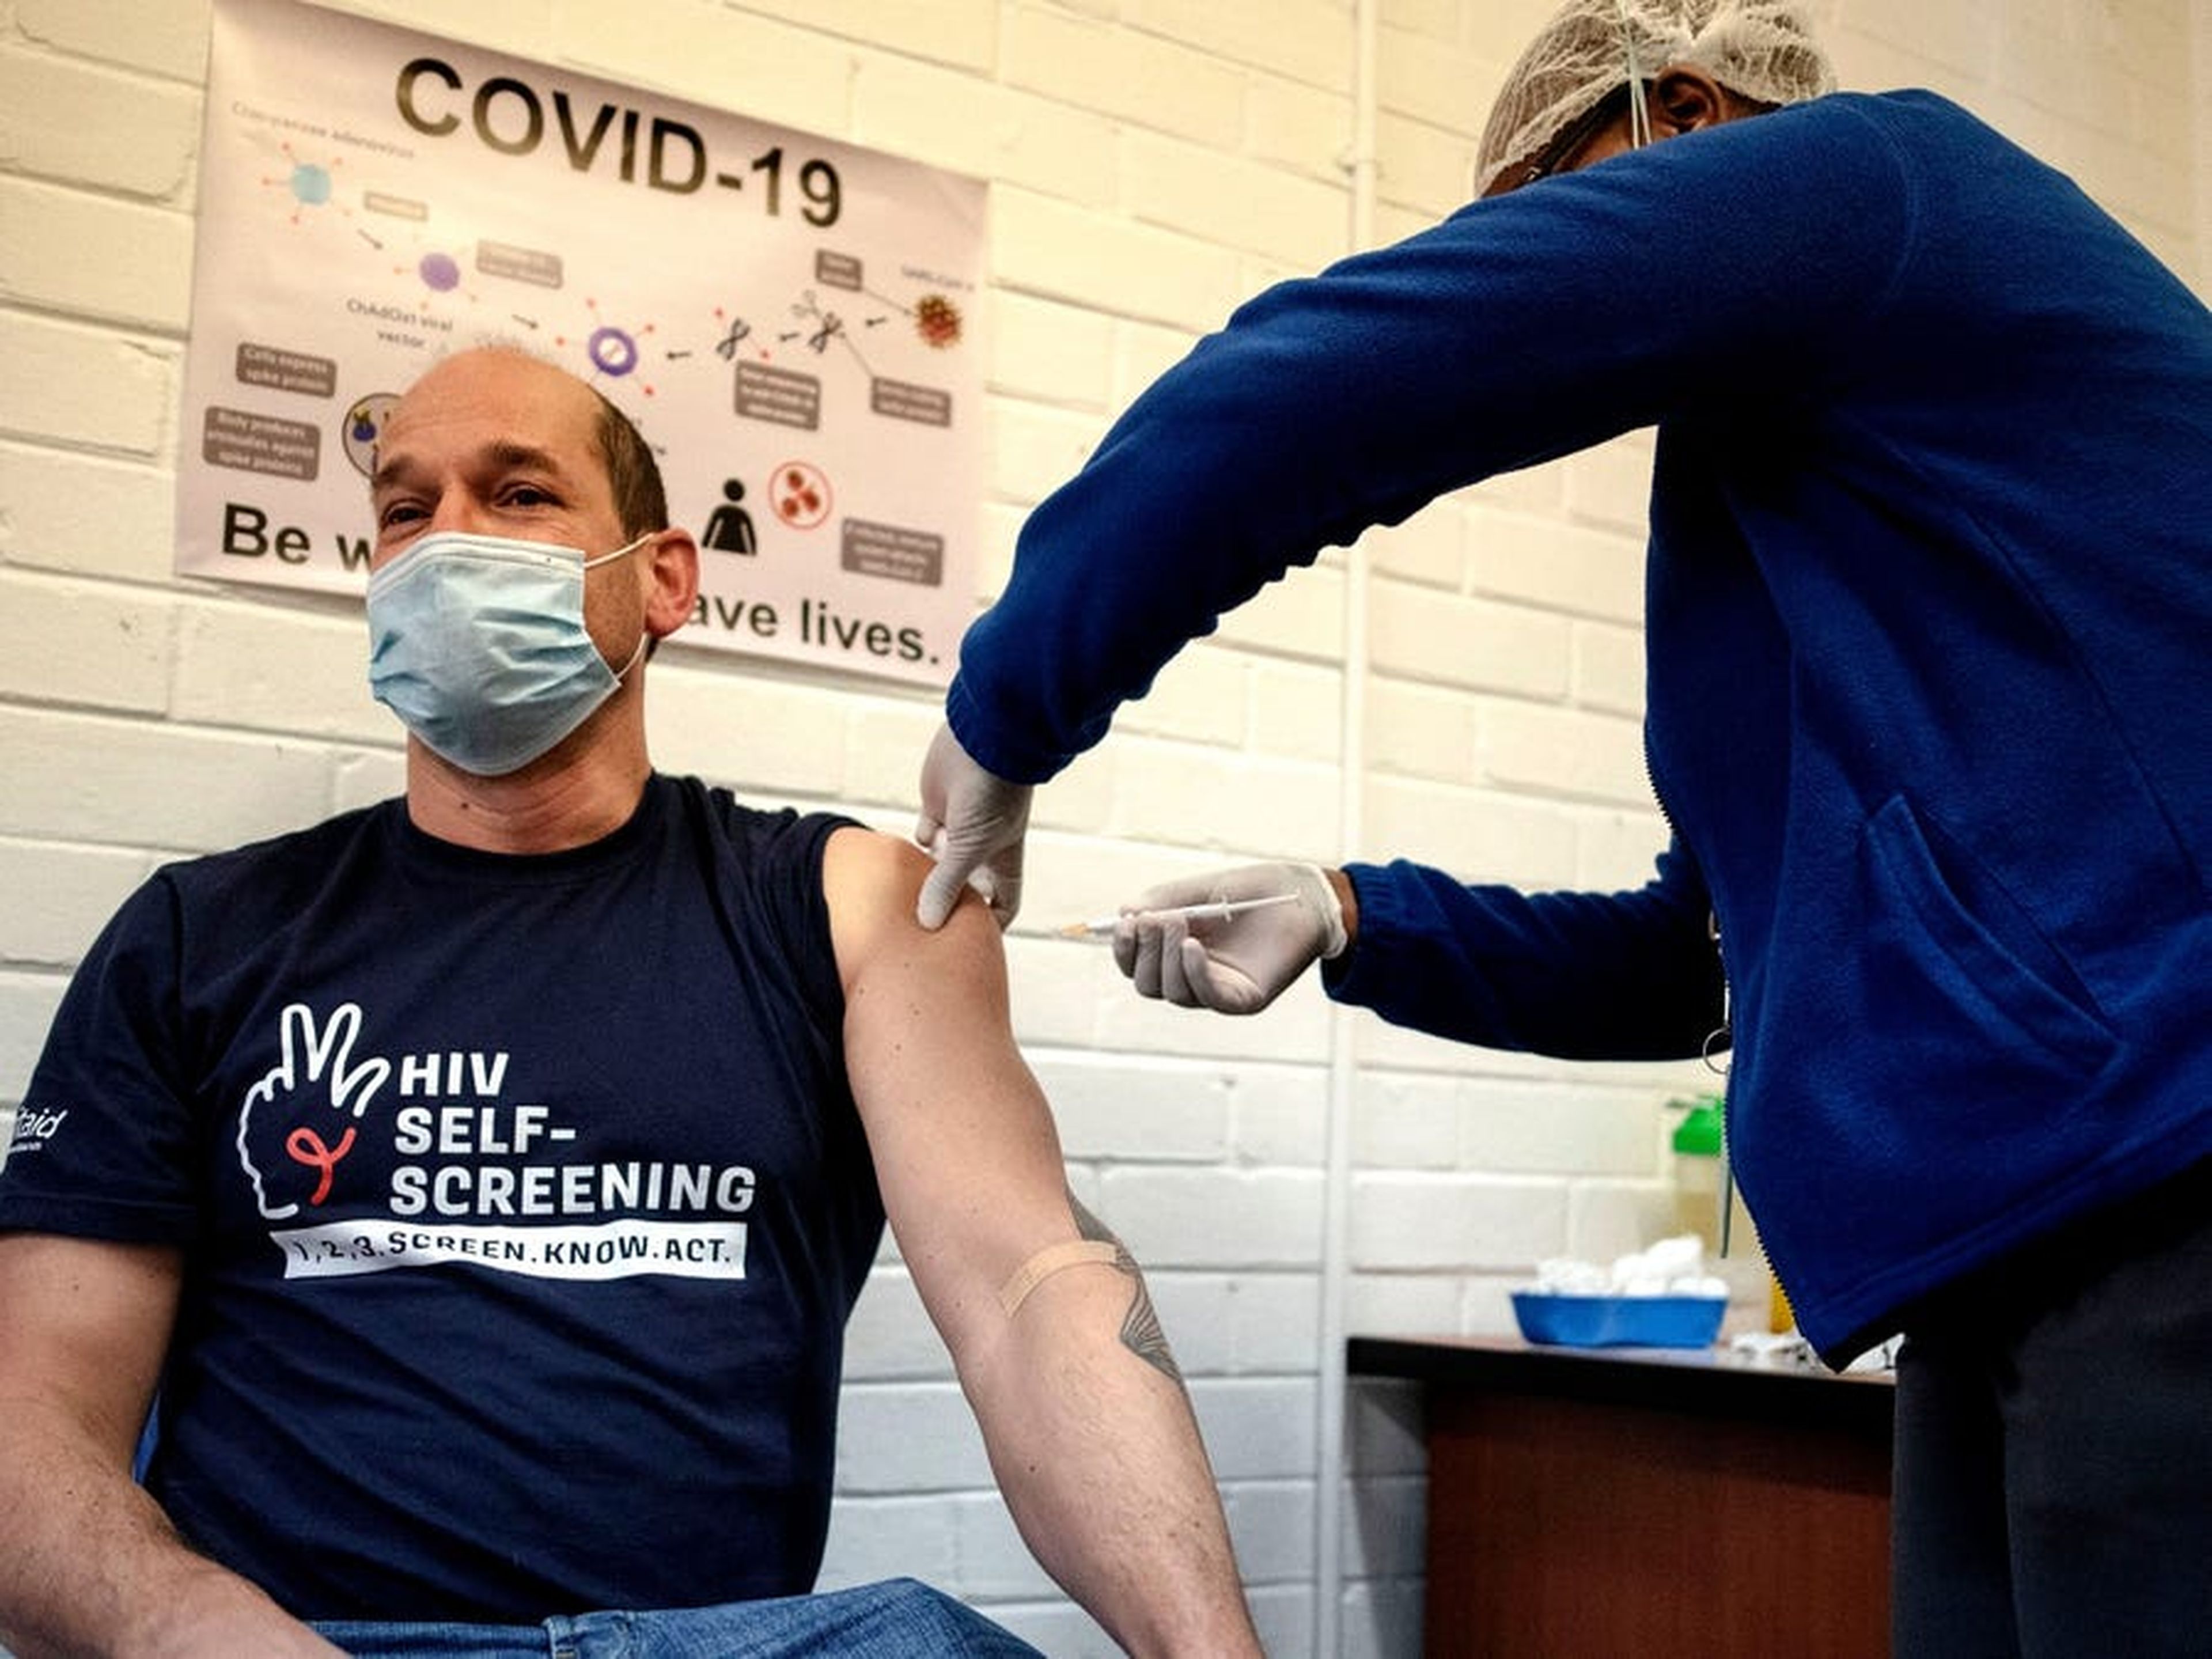 El profesor Francois Venter recibe una vacuna experimental contra el coronavirus en el Hospital Chris Hani Baragwanath de Soweto, Sudáfrica